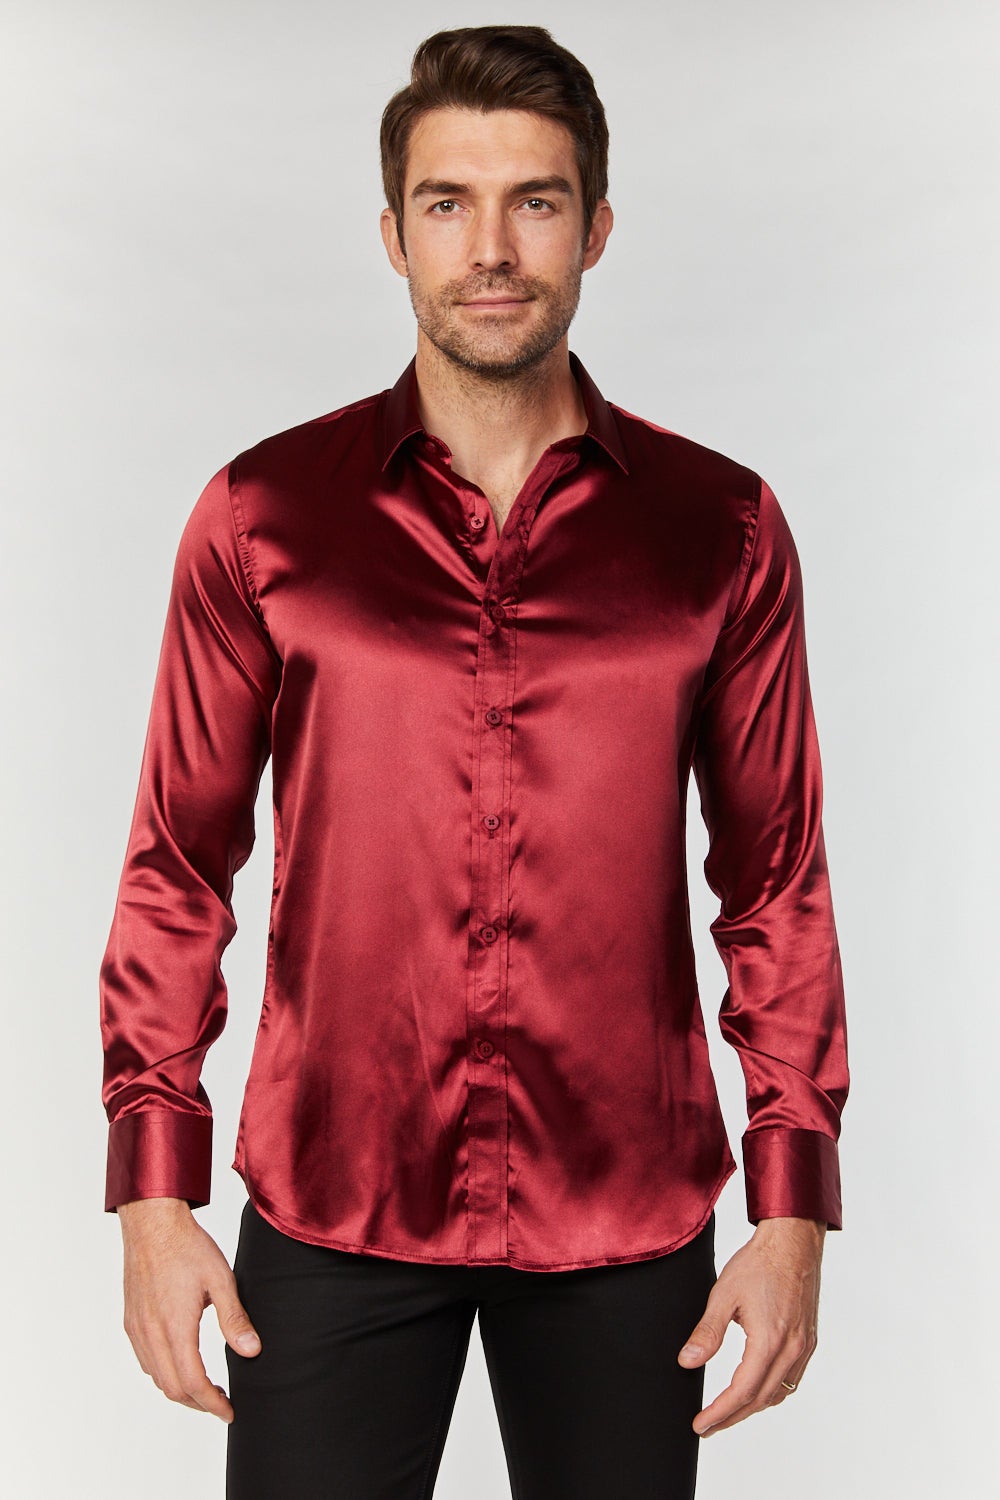 maroon dress shirt